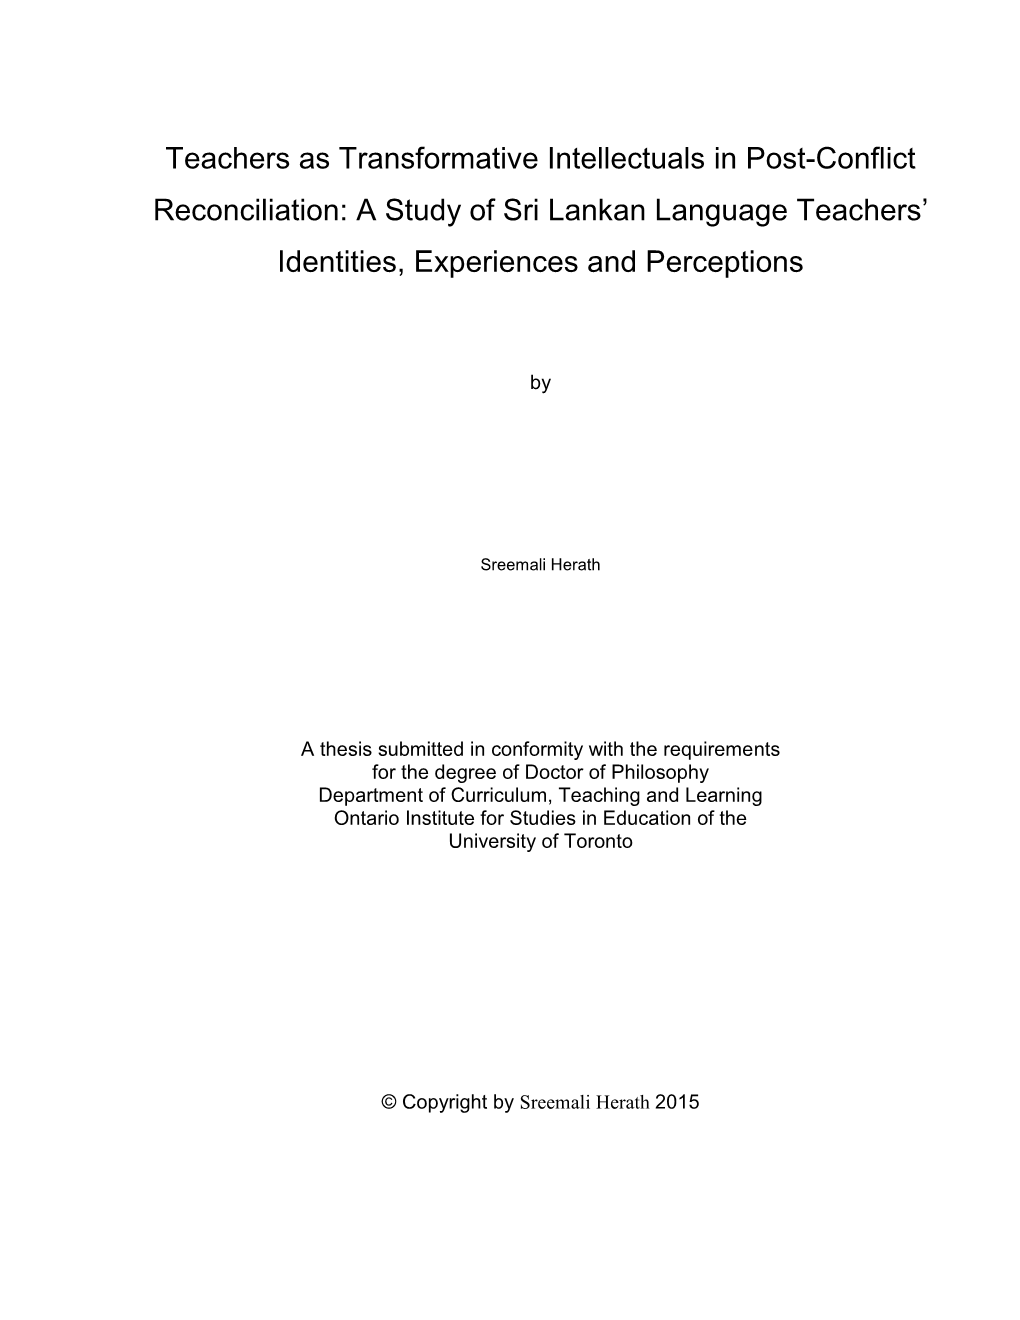 A Study of Sri Lankan Language Teachers' Identities